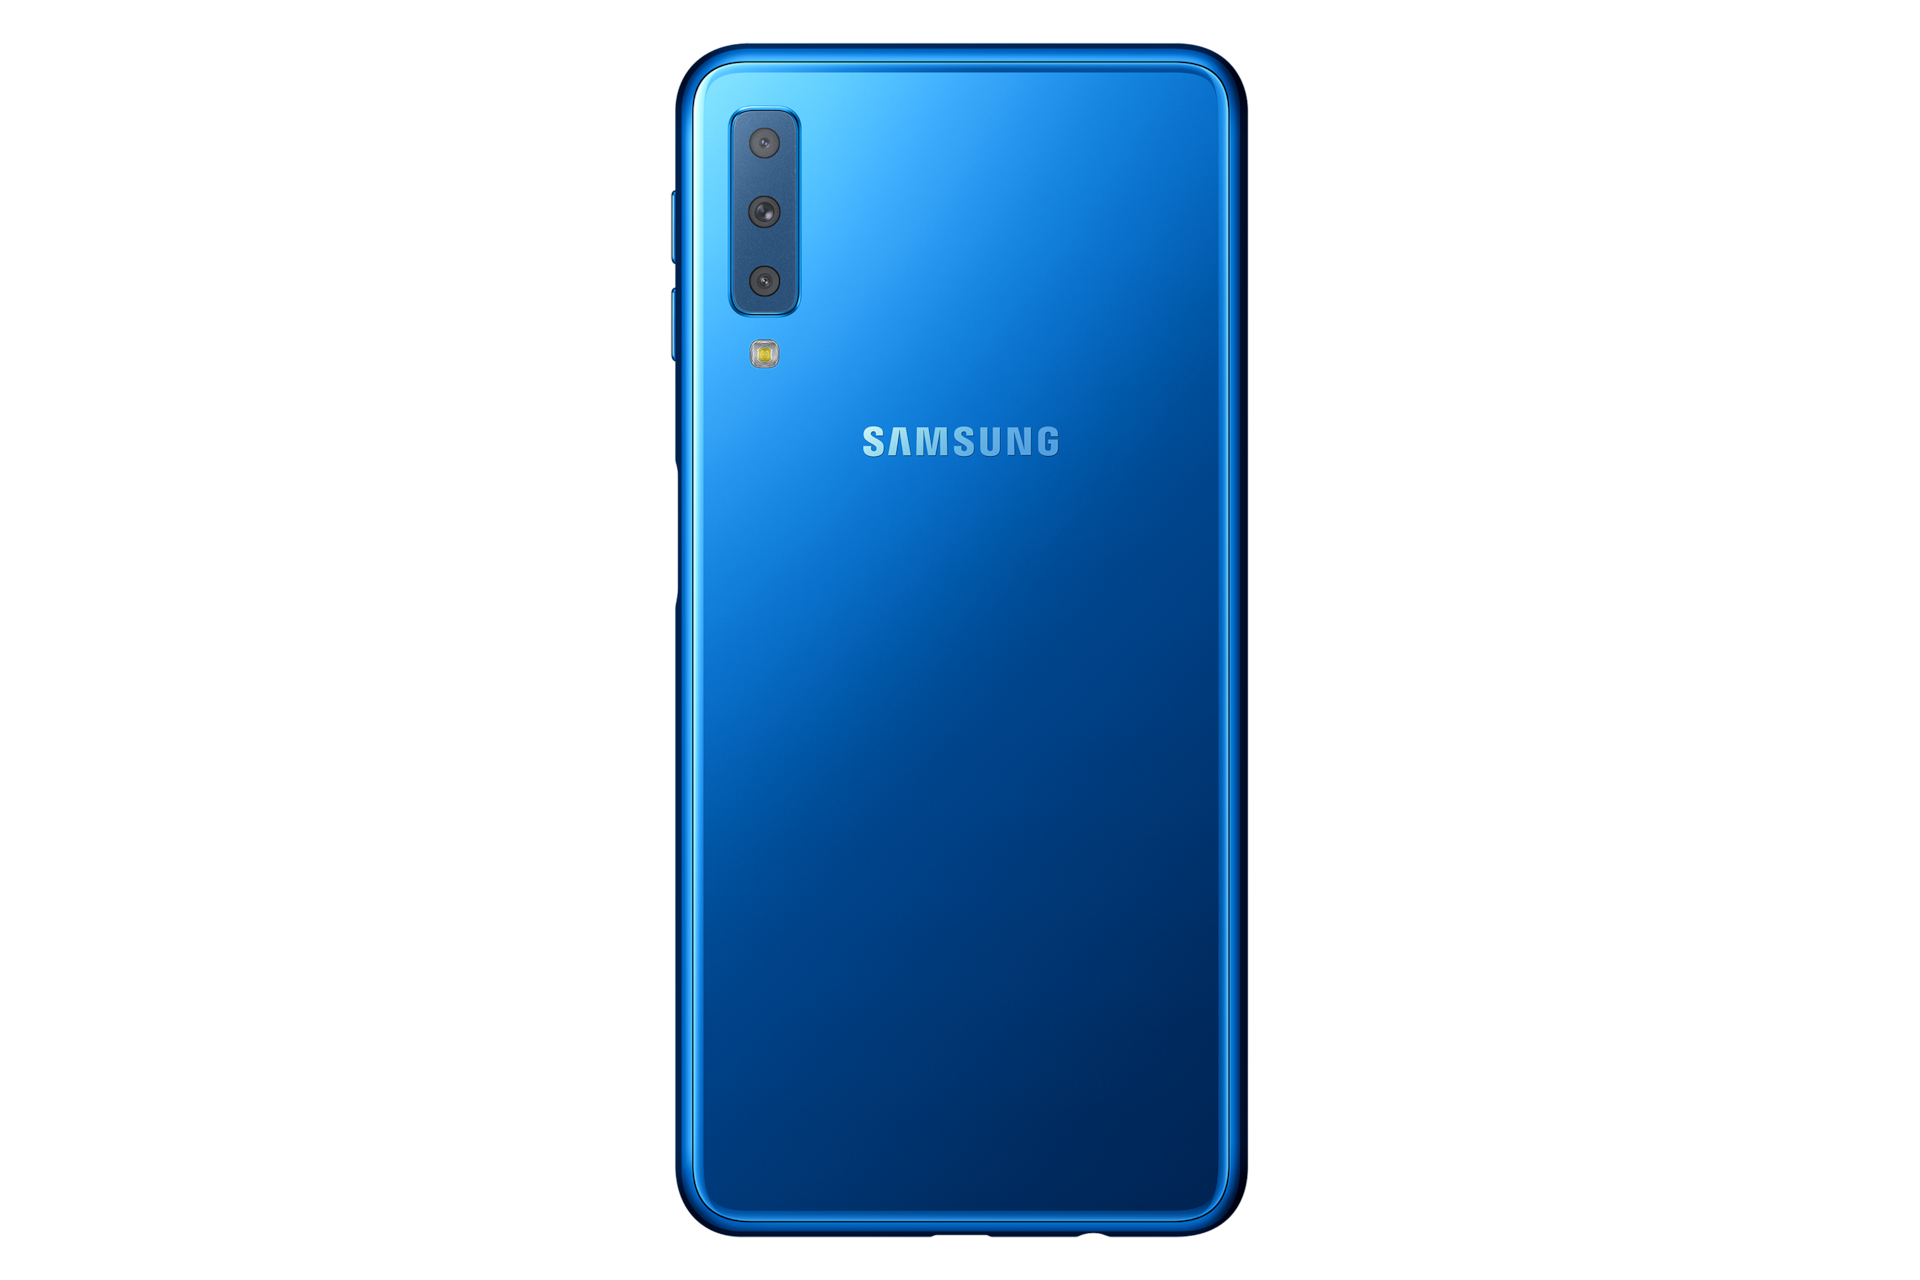 grens Lief Kiezen Beli Samsung Galaxy A7 Blue 64GB | Samsung Indonesia